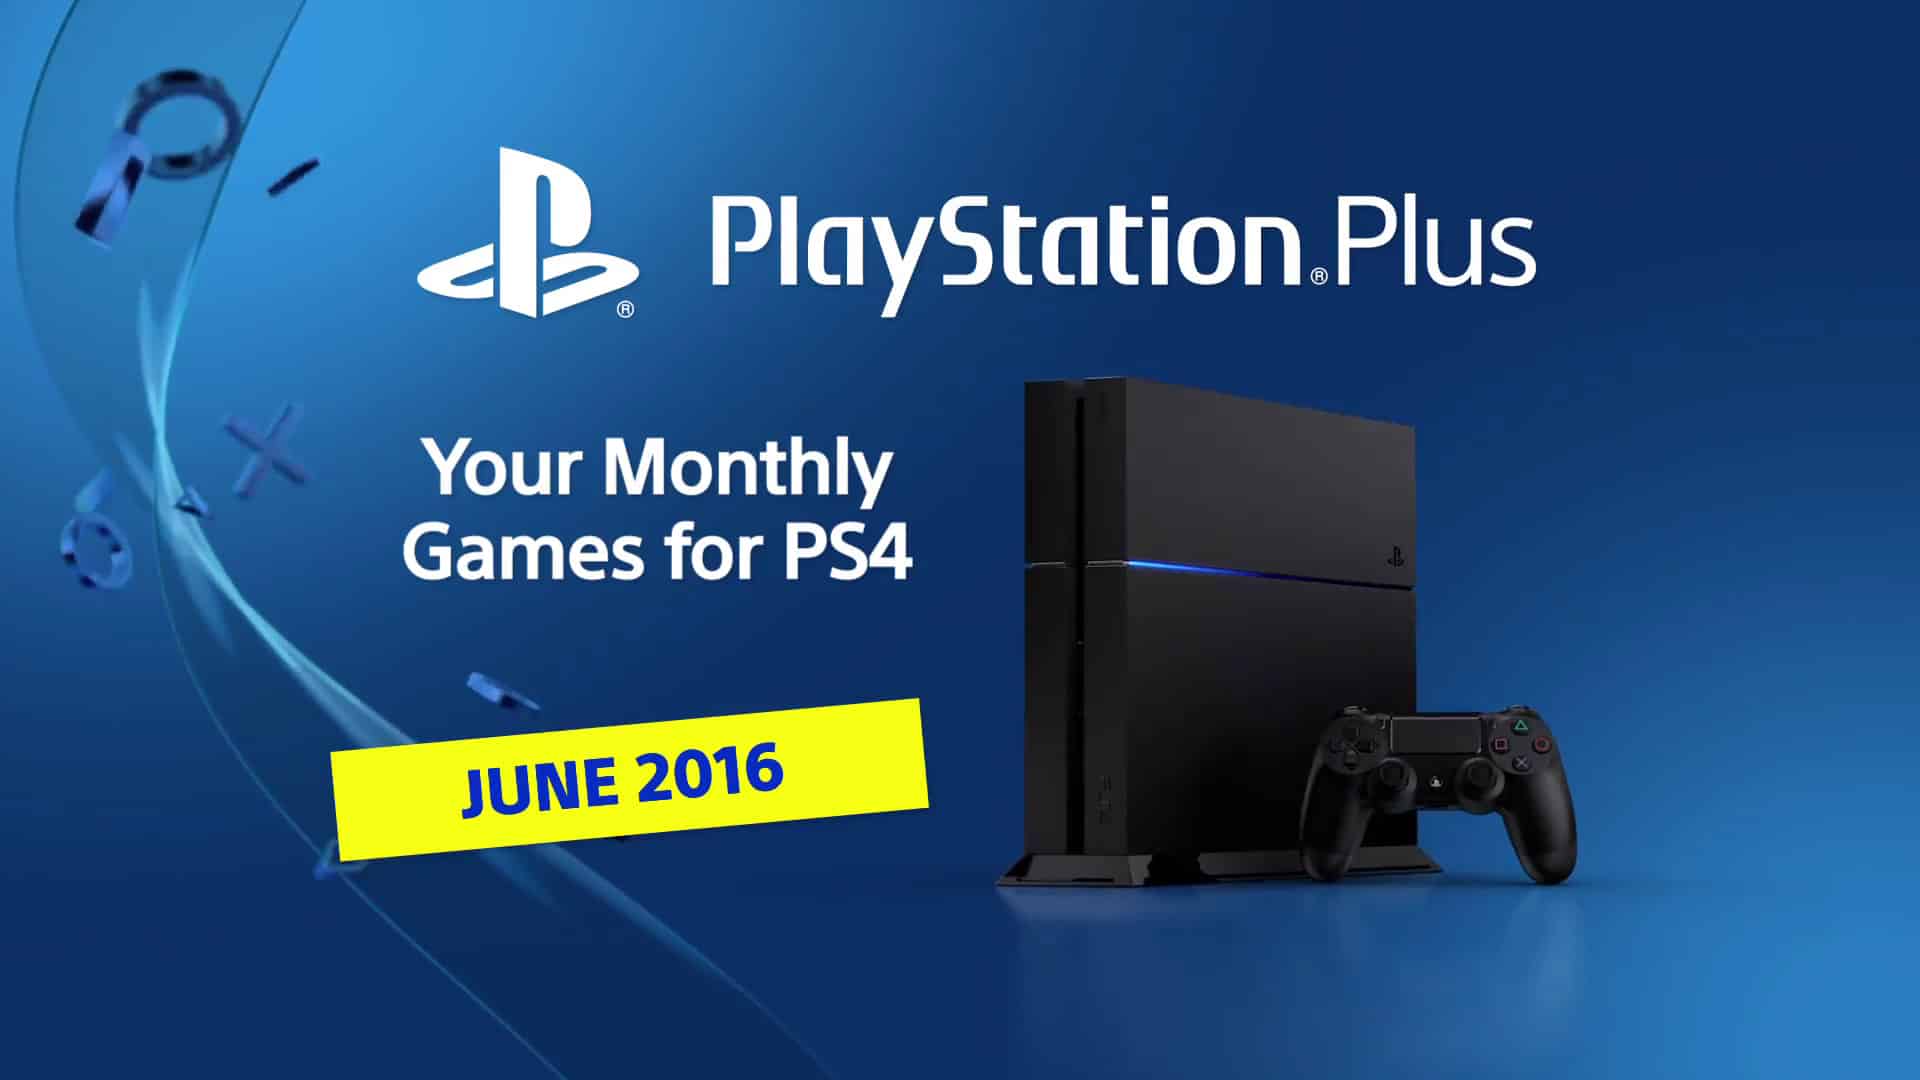 Playstation 2016a. Ps4 Plus. PLAYSTATION Plus. PS Plus игры. PS Plus июль.